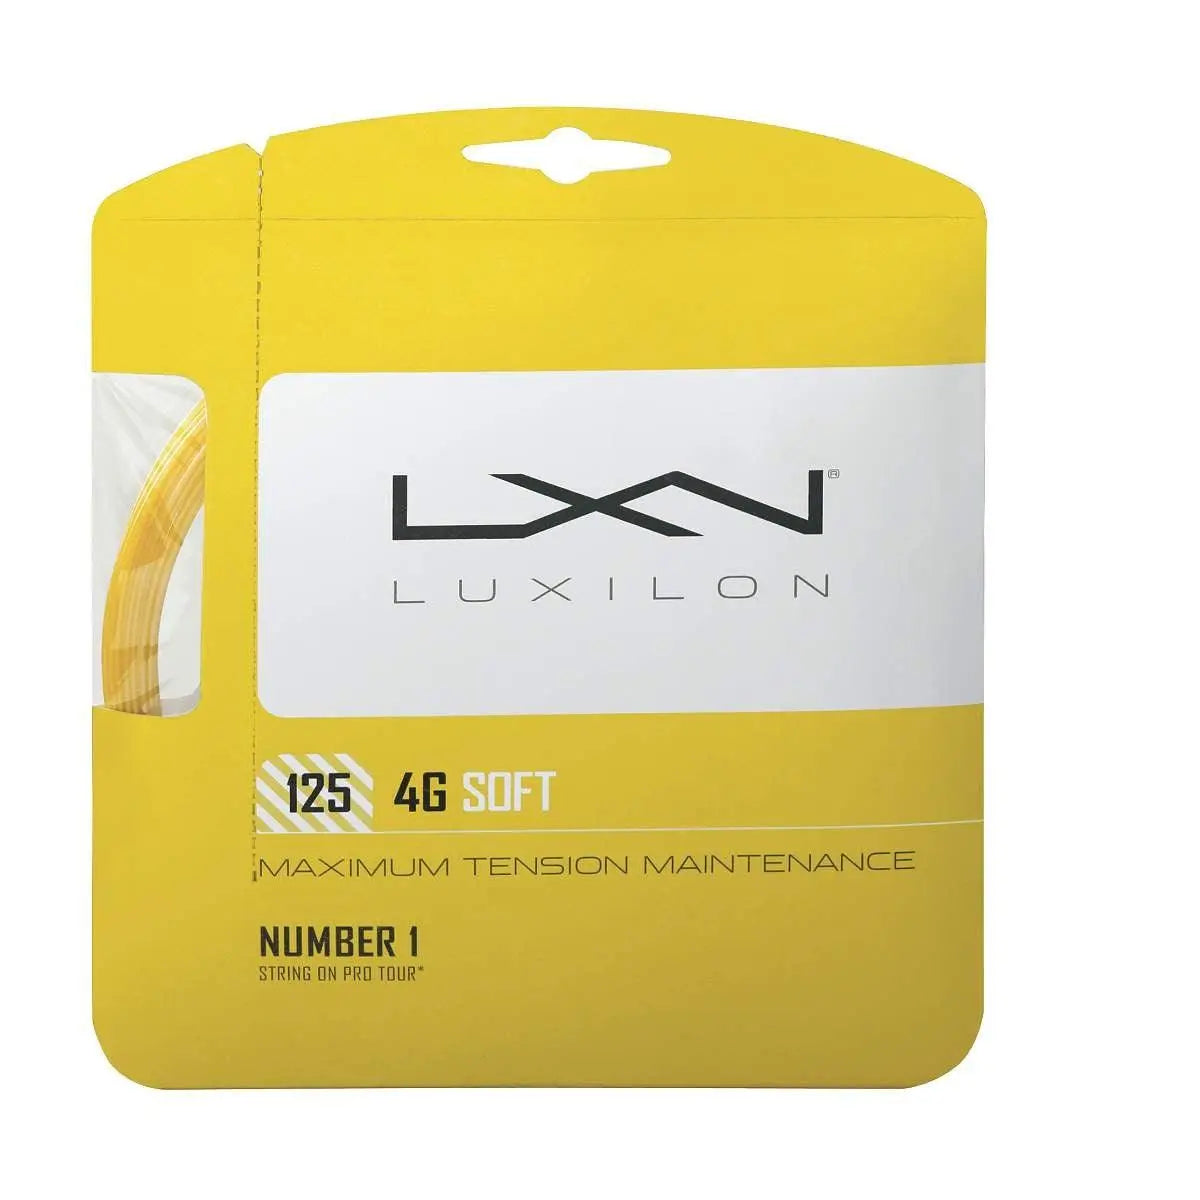 Luxilon 4G Soft 125 Tennis String Set Racquet Point